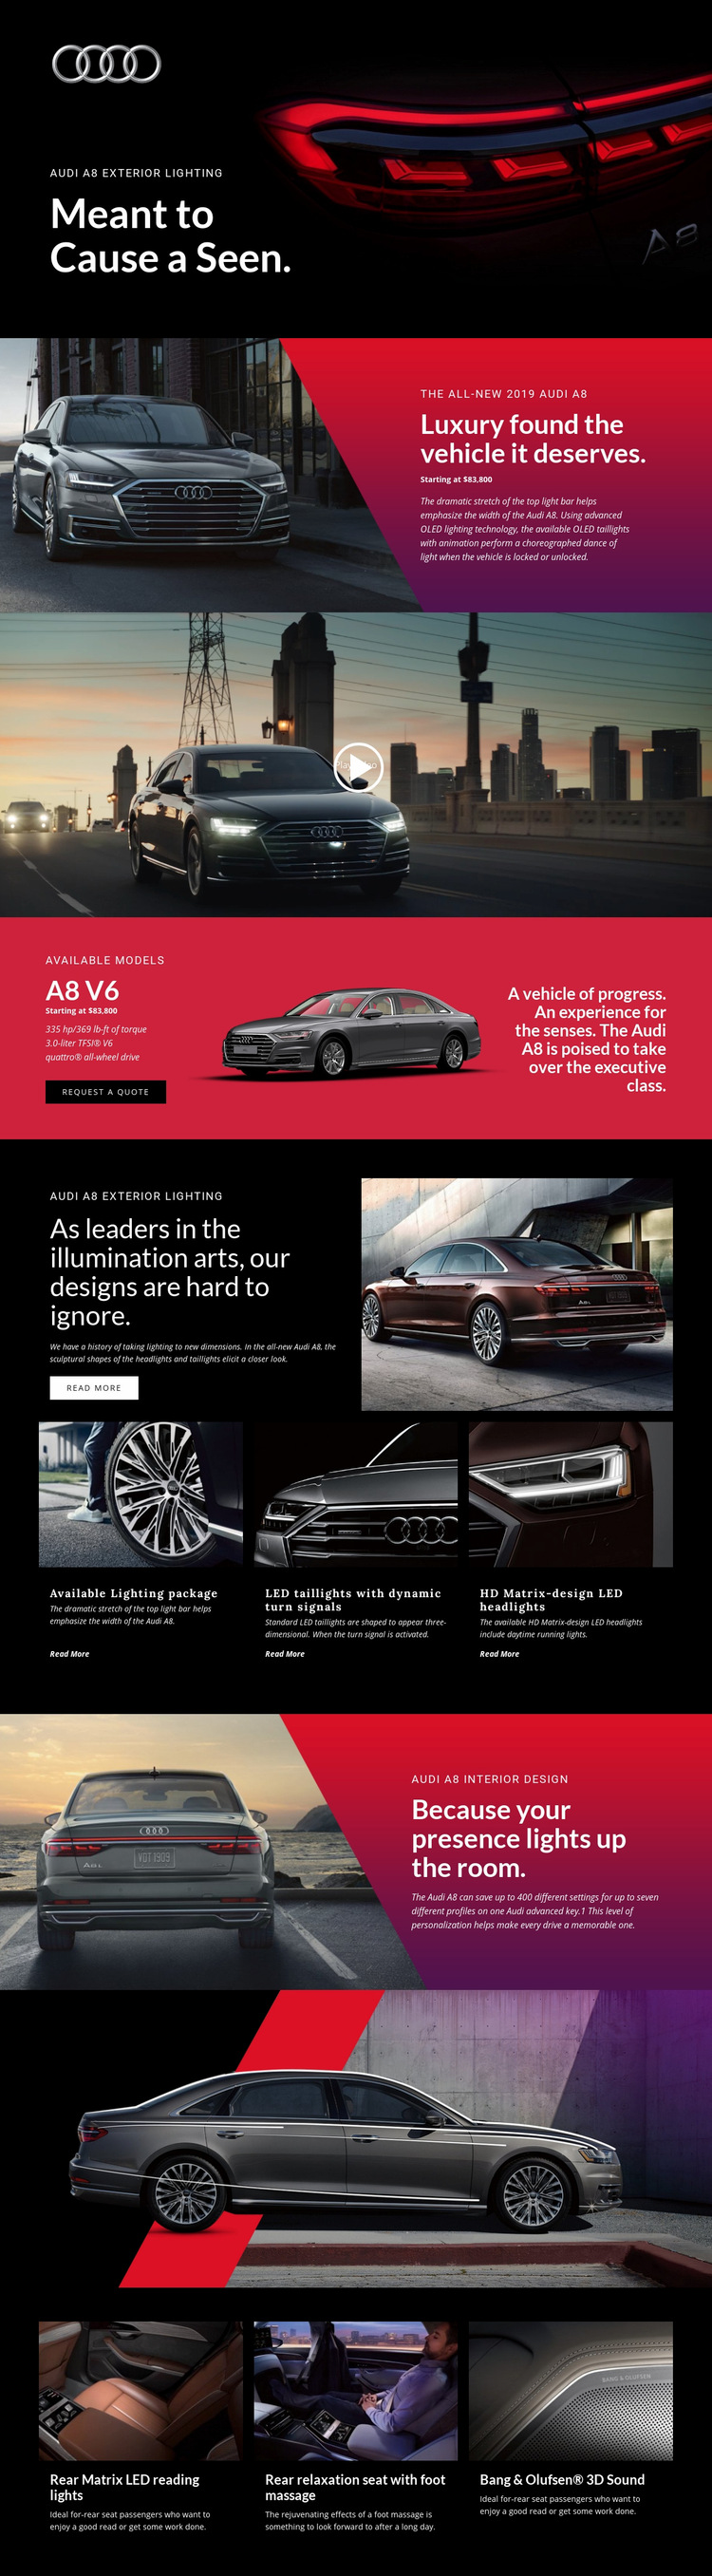 Audi luxury cars Web Page Design